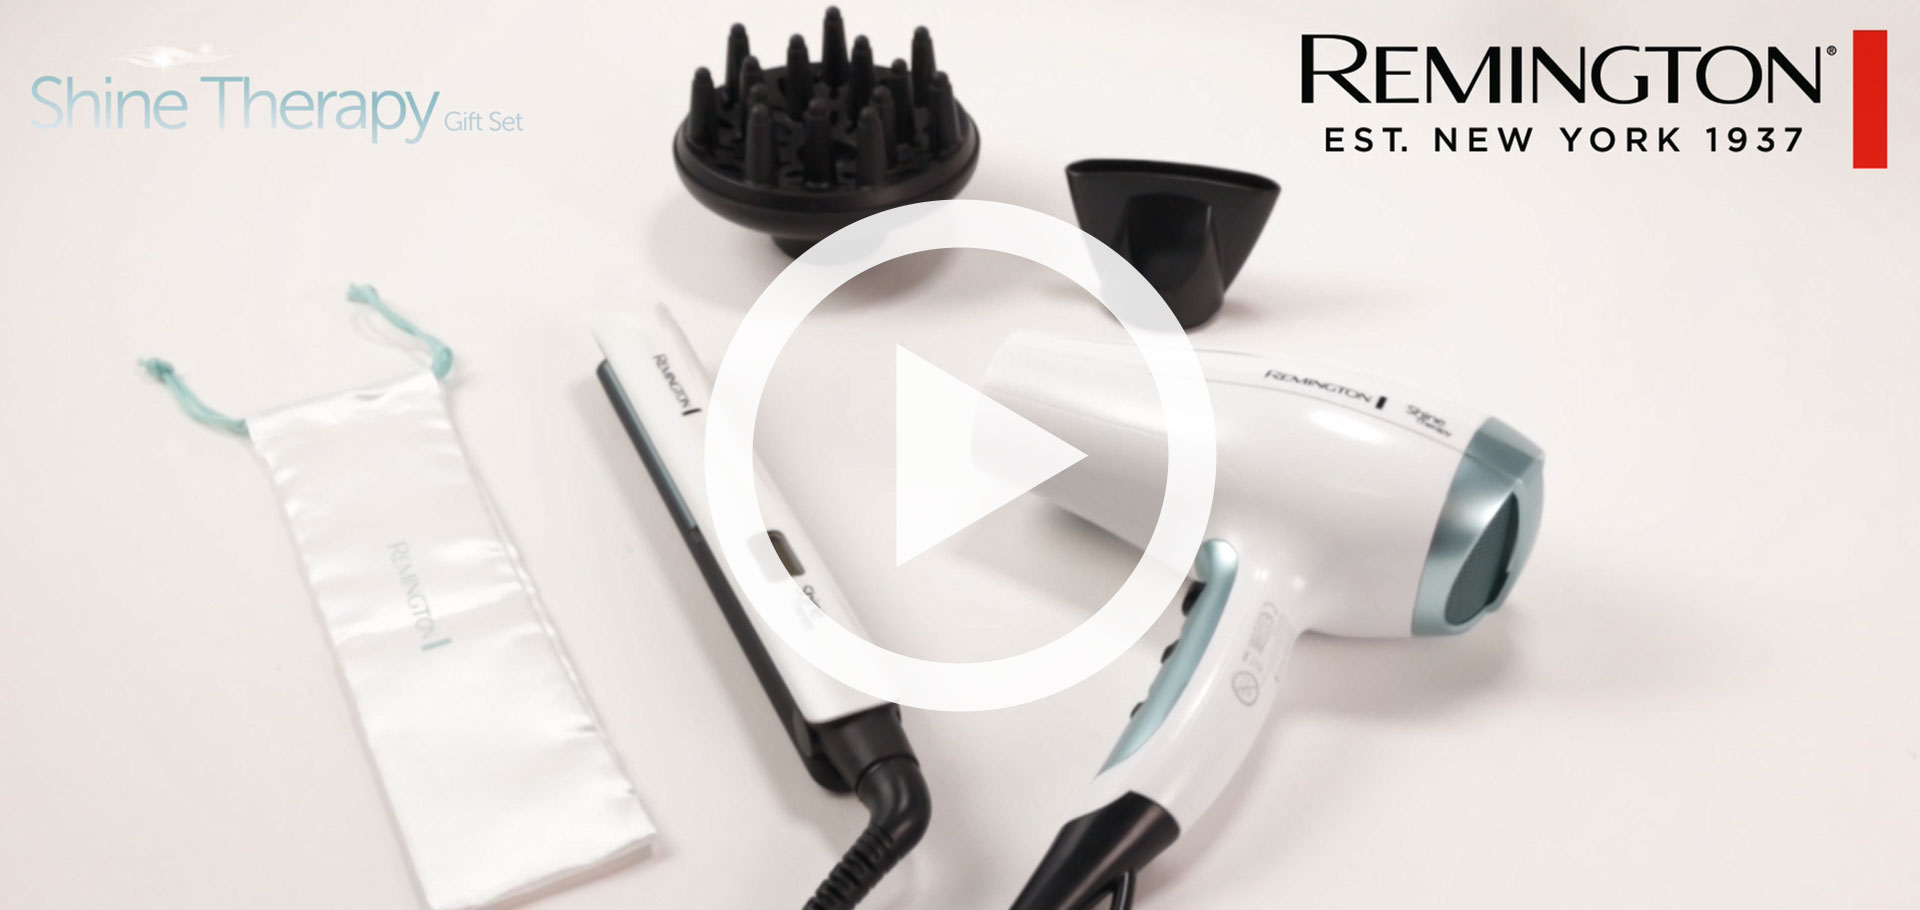 Remington Hair Dryer | remington shine therapy hair dryer model - d5216 |  By Quick ViewFacebook